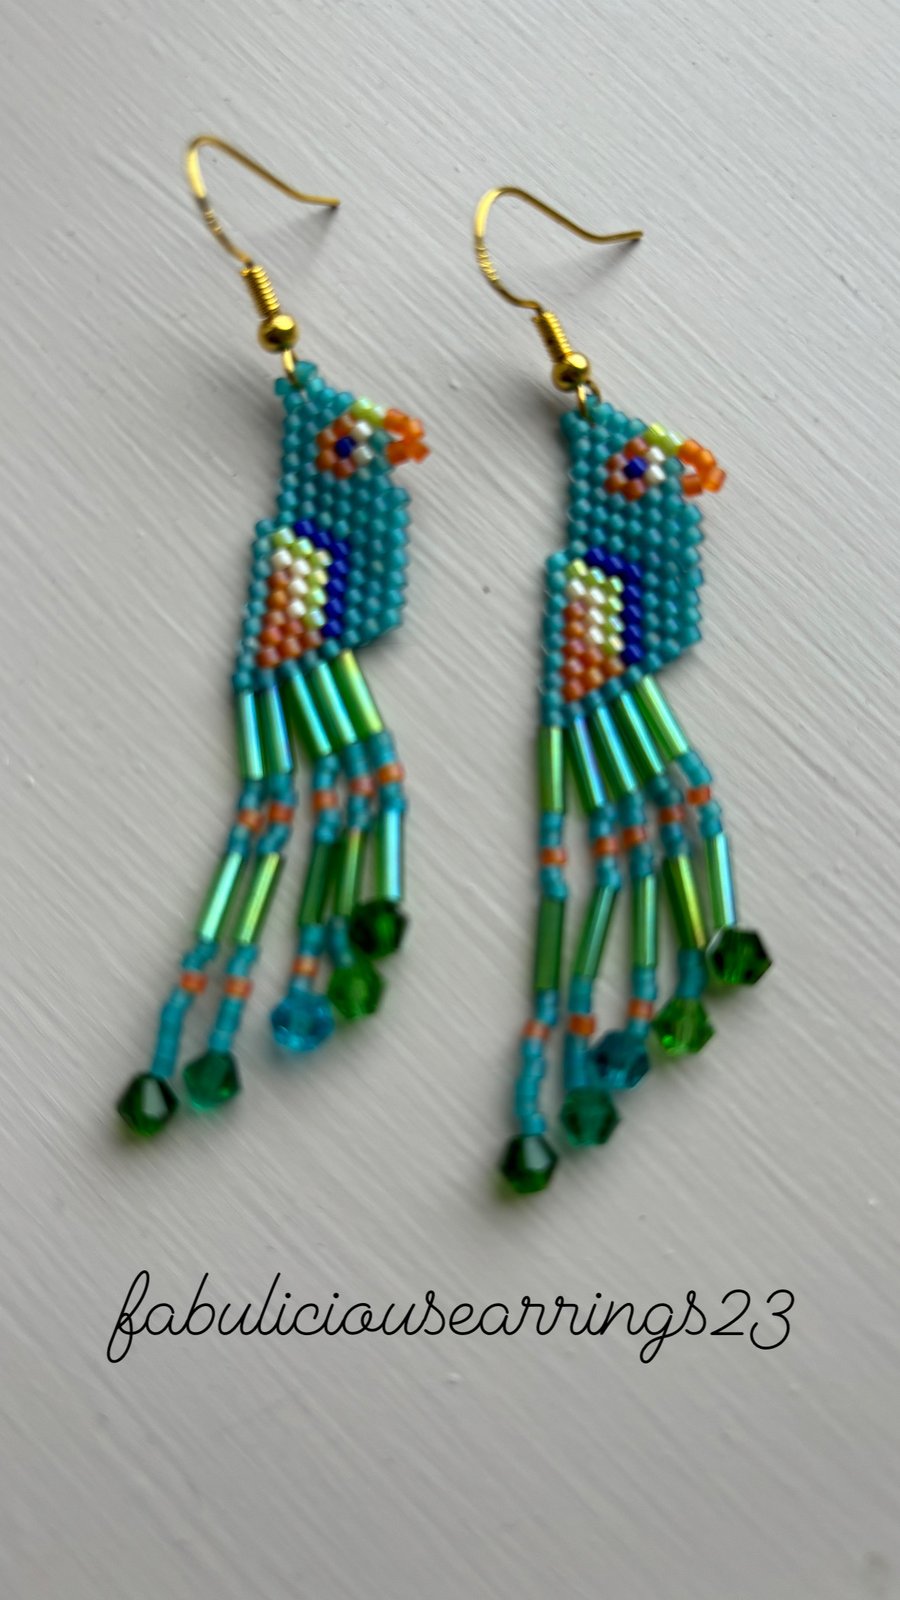 Handmade cute parrots made from Miyuki delica beads (not my design)